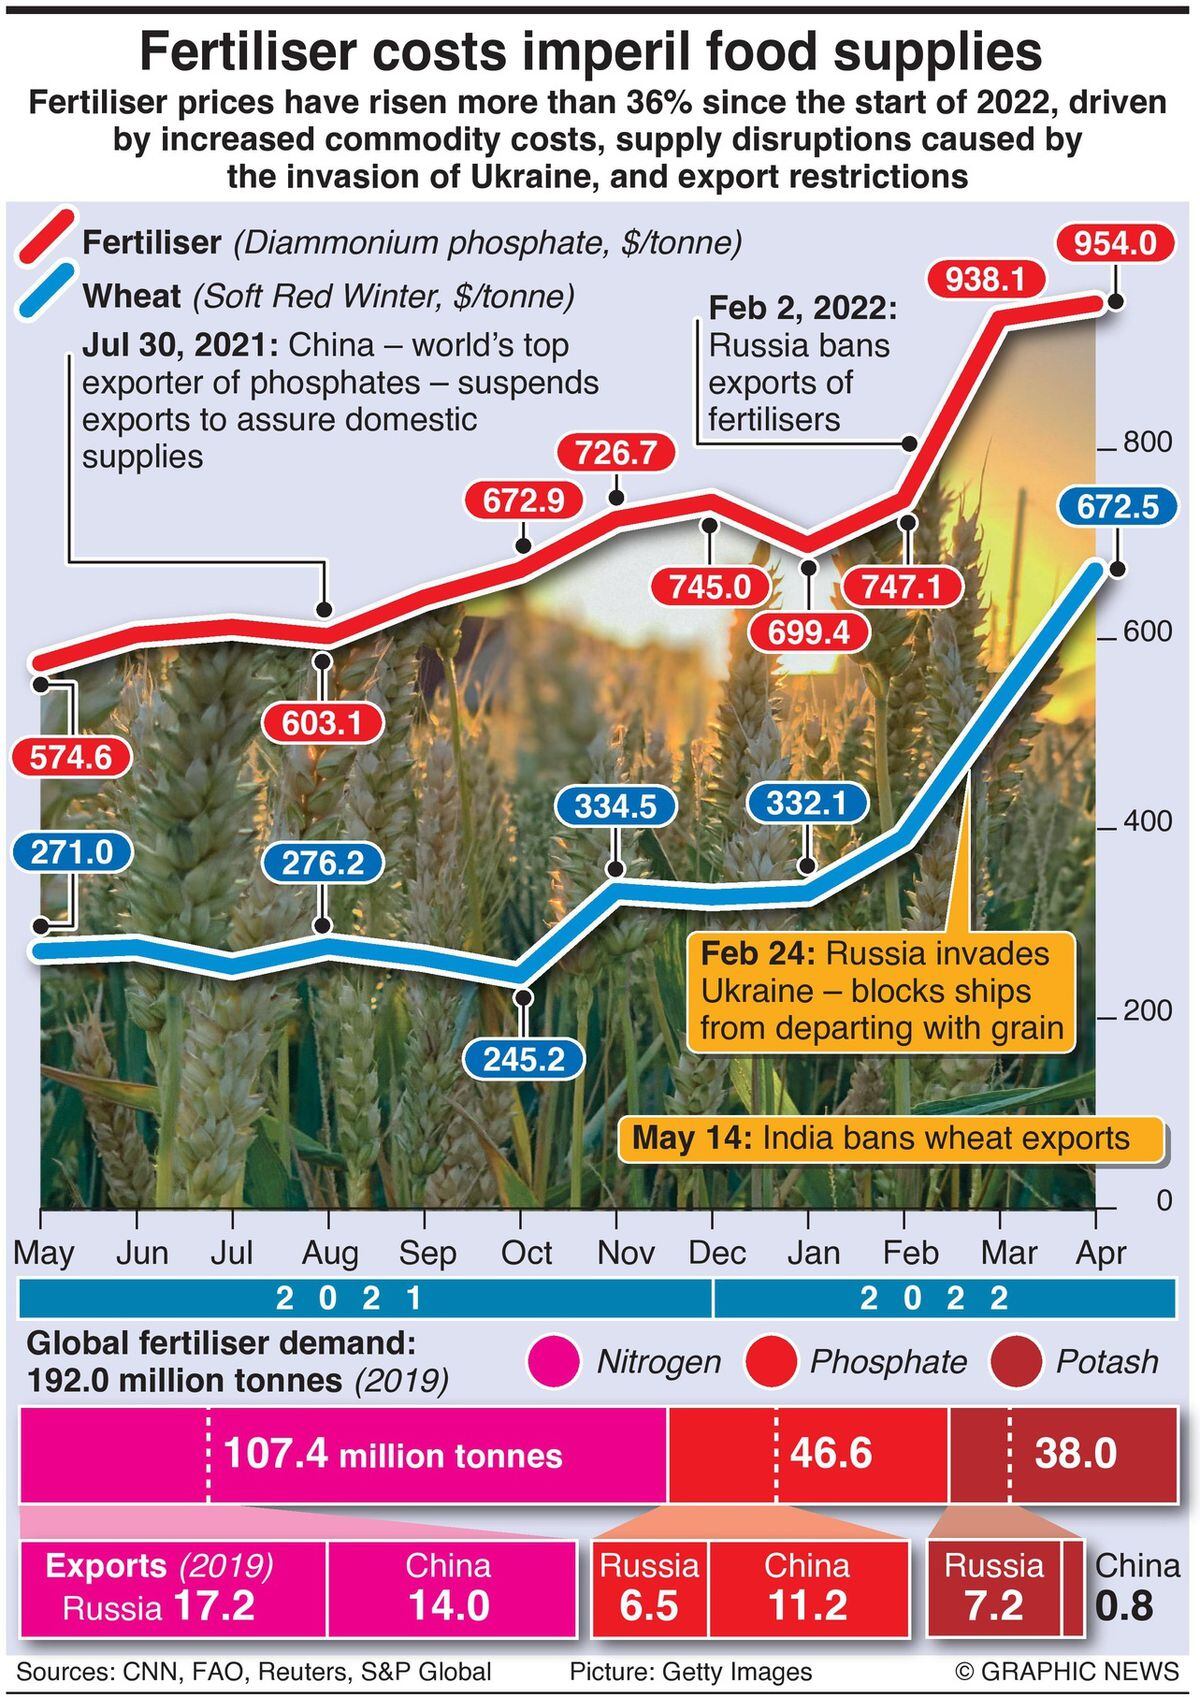 Fertiliser prices have risen dramatically